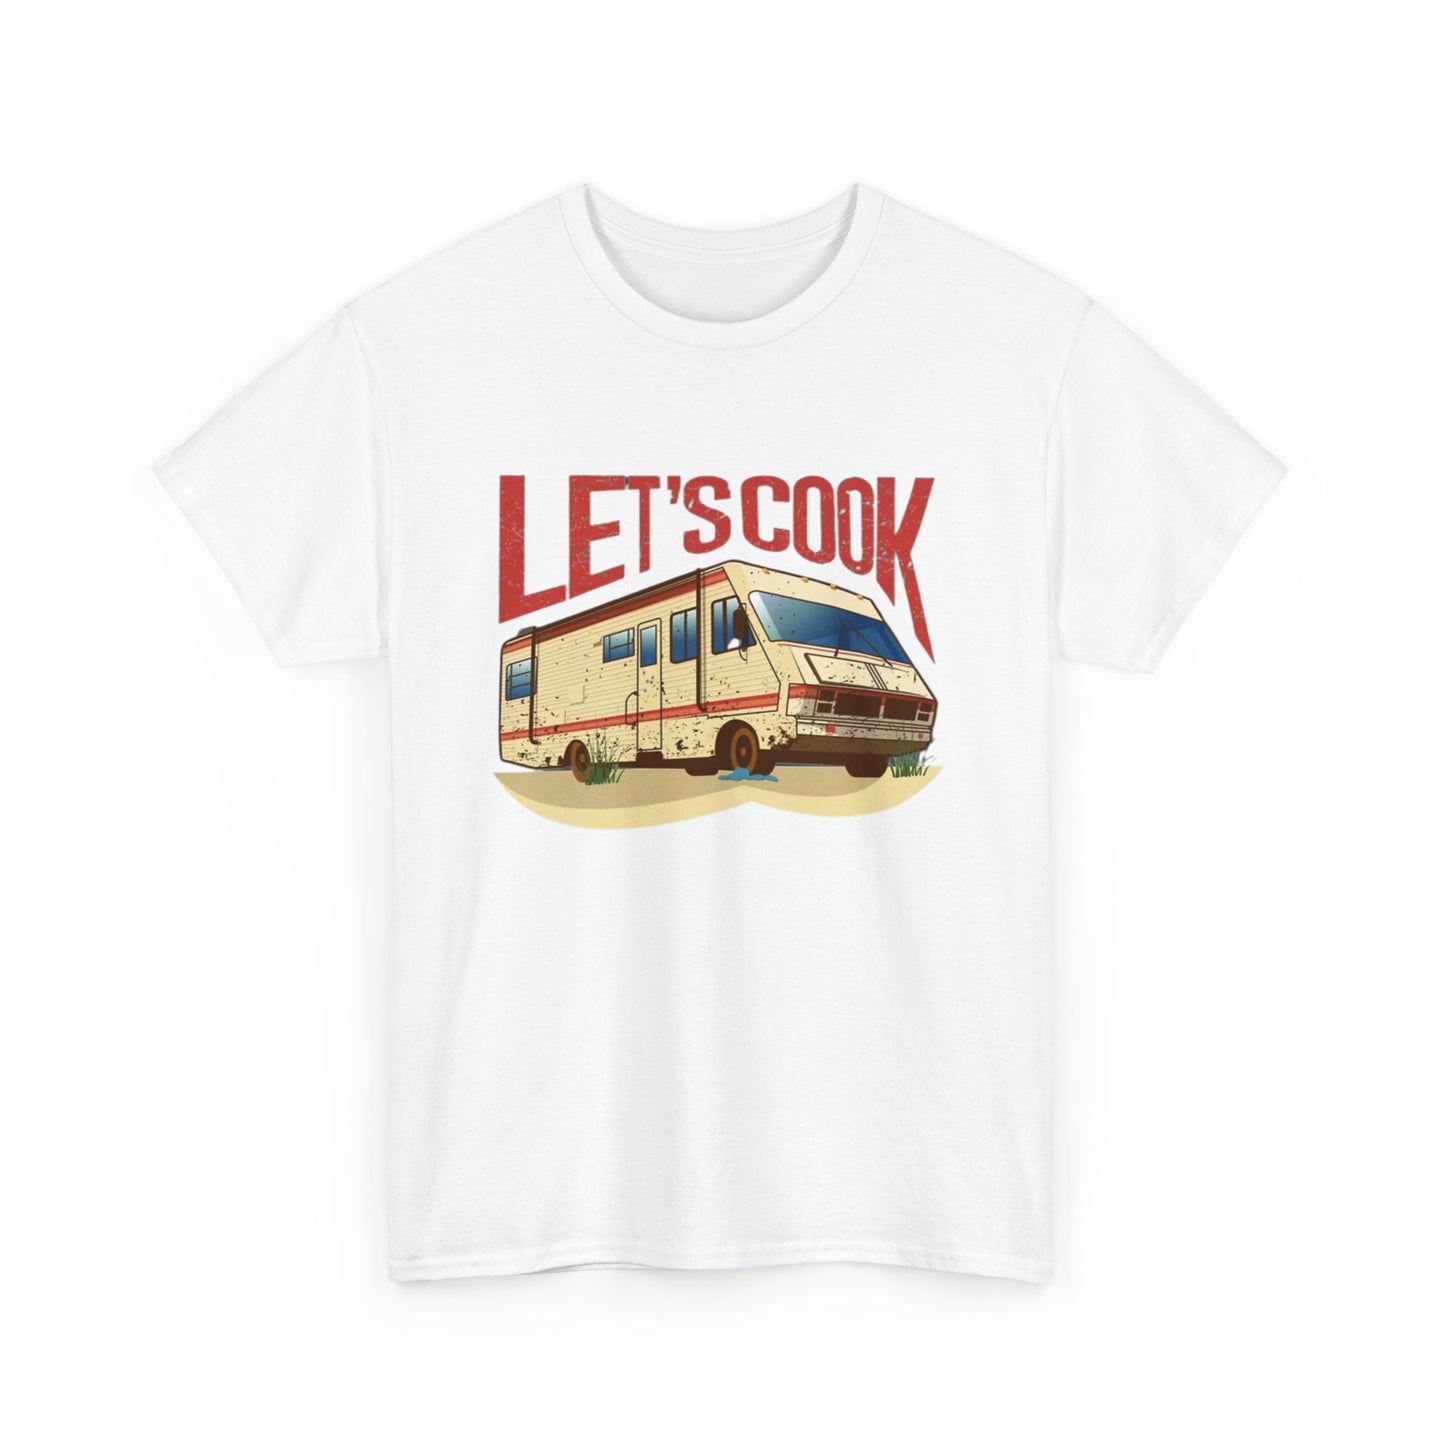 Let's Cook - Breaking Bad Unisex T-Shirt